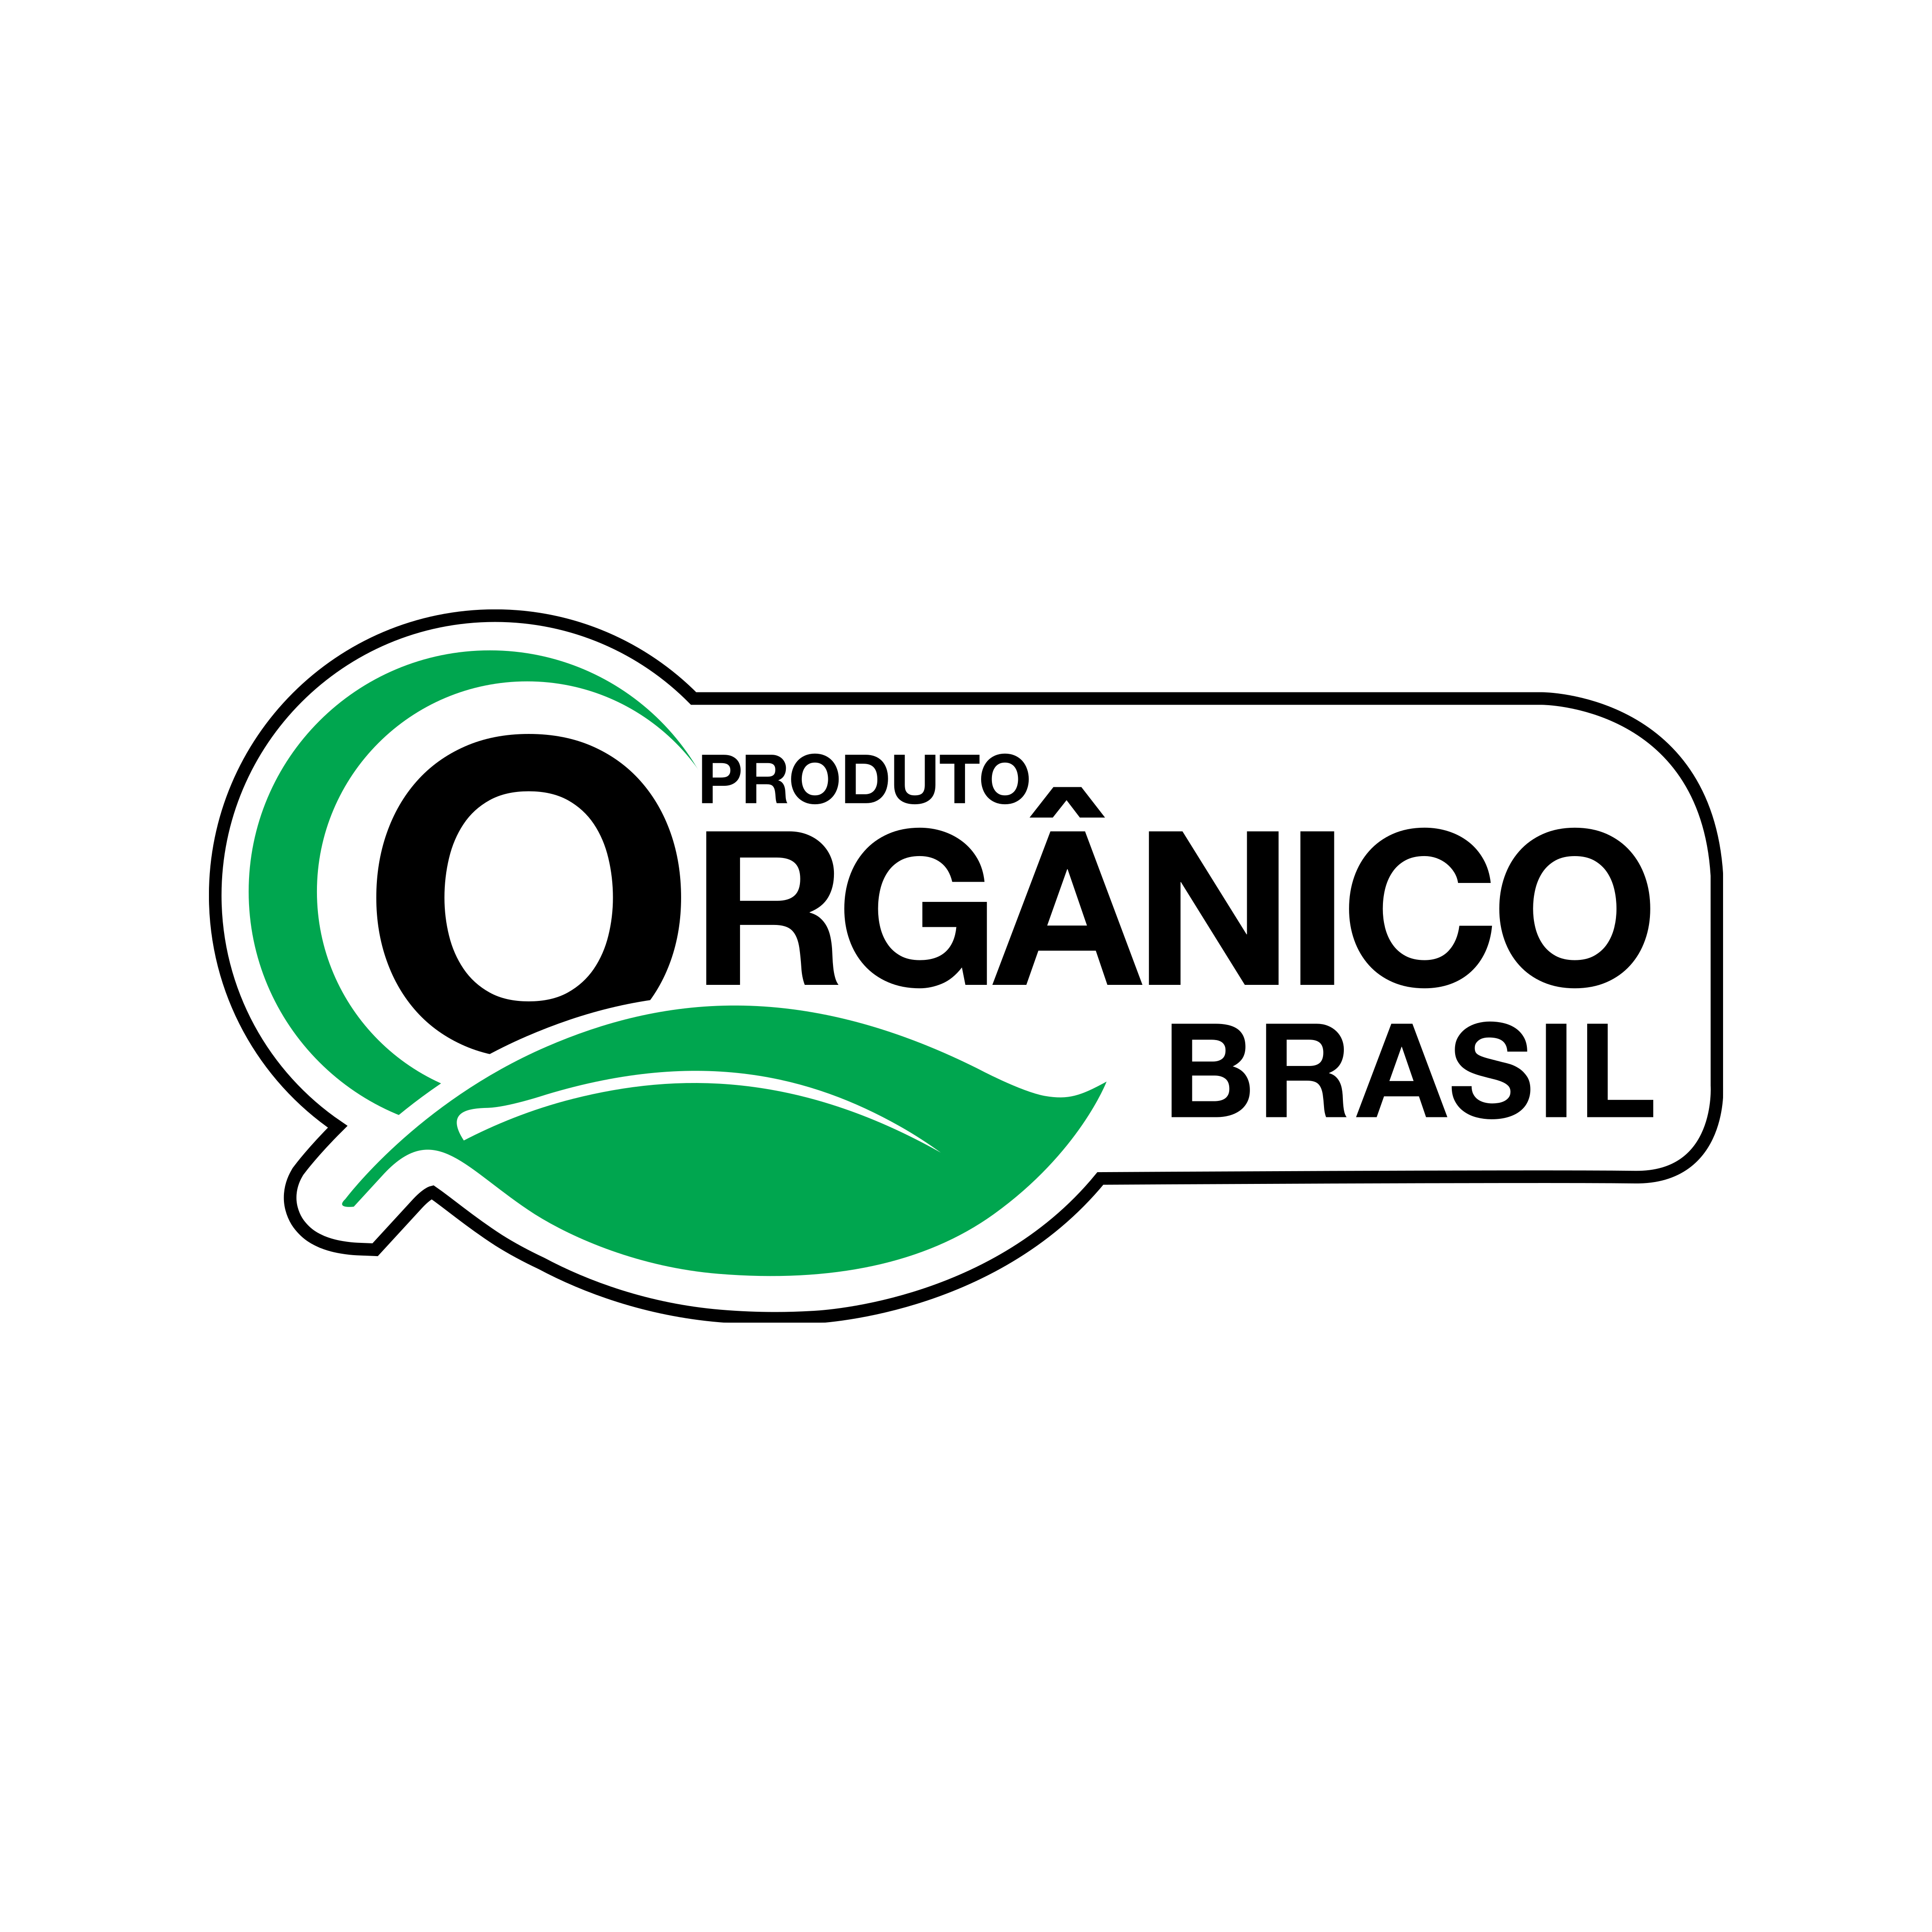 Produto Orgânico Brasil Logo PNG.